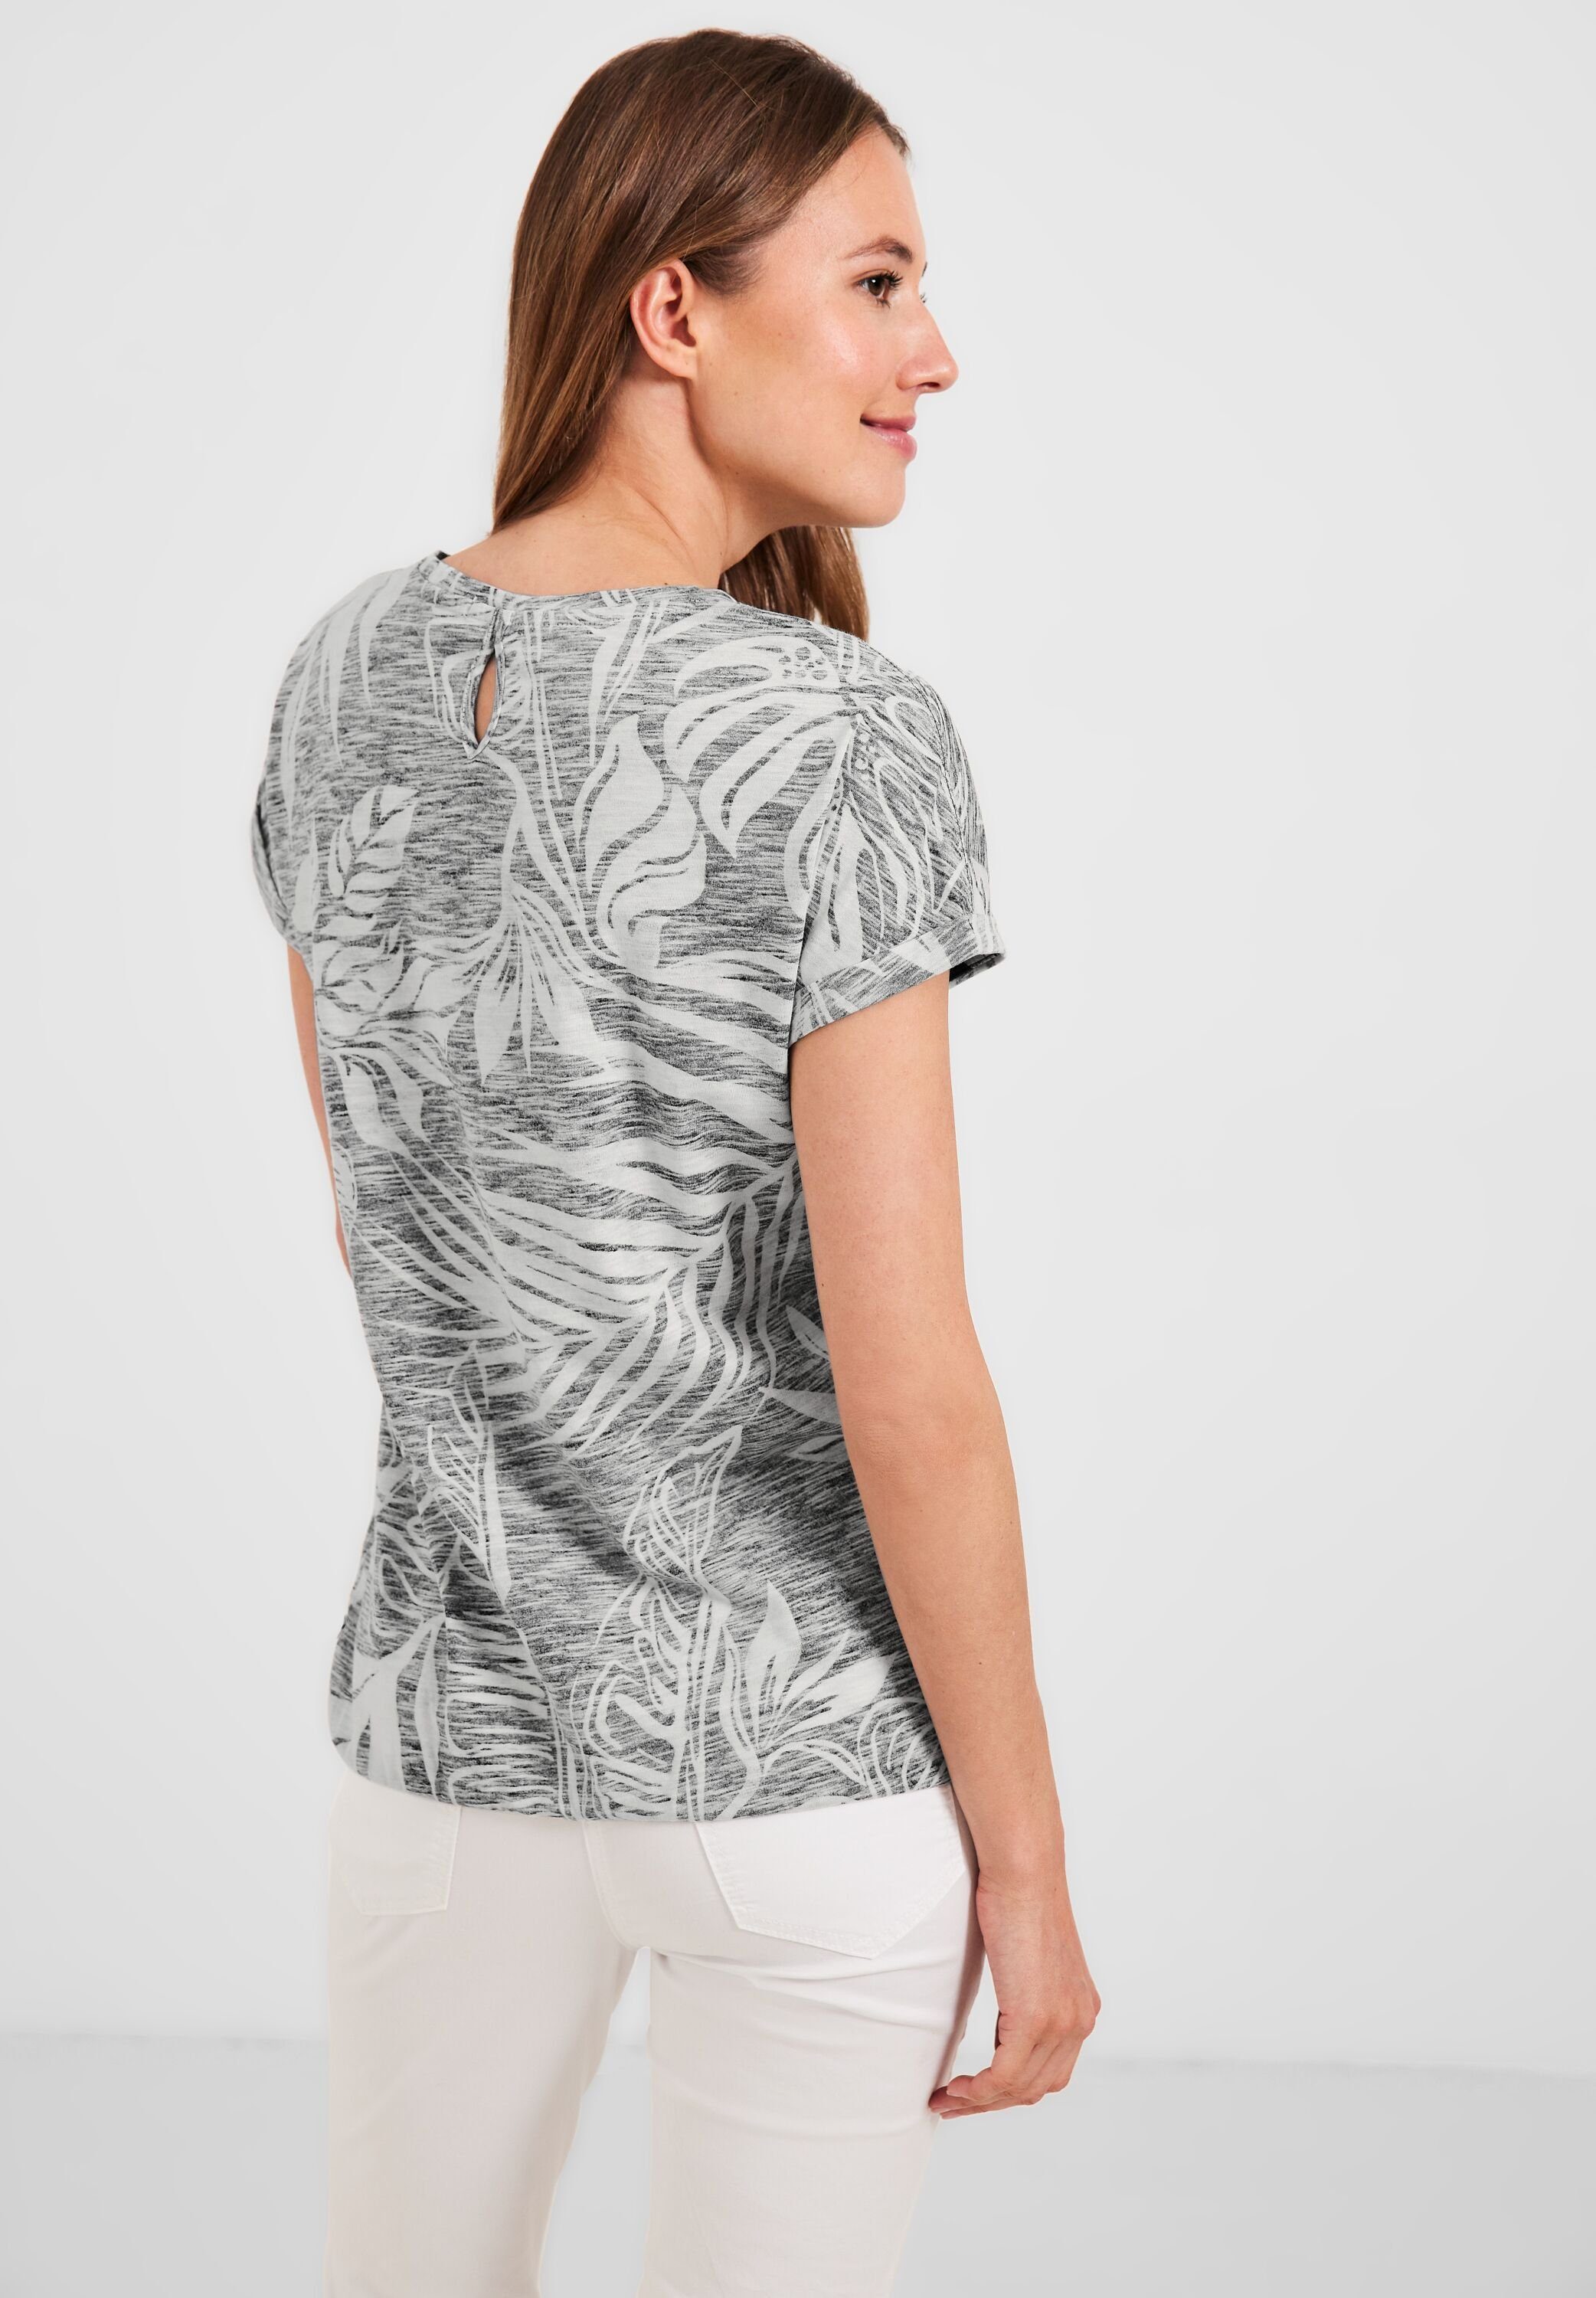 carbon Cecil grey T-Shirt